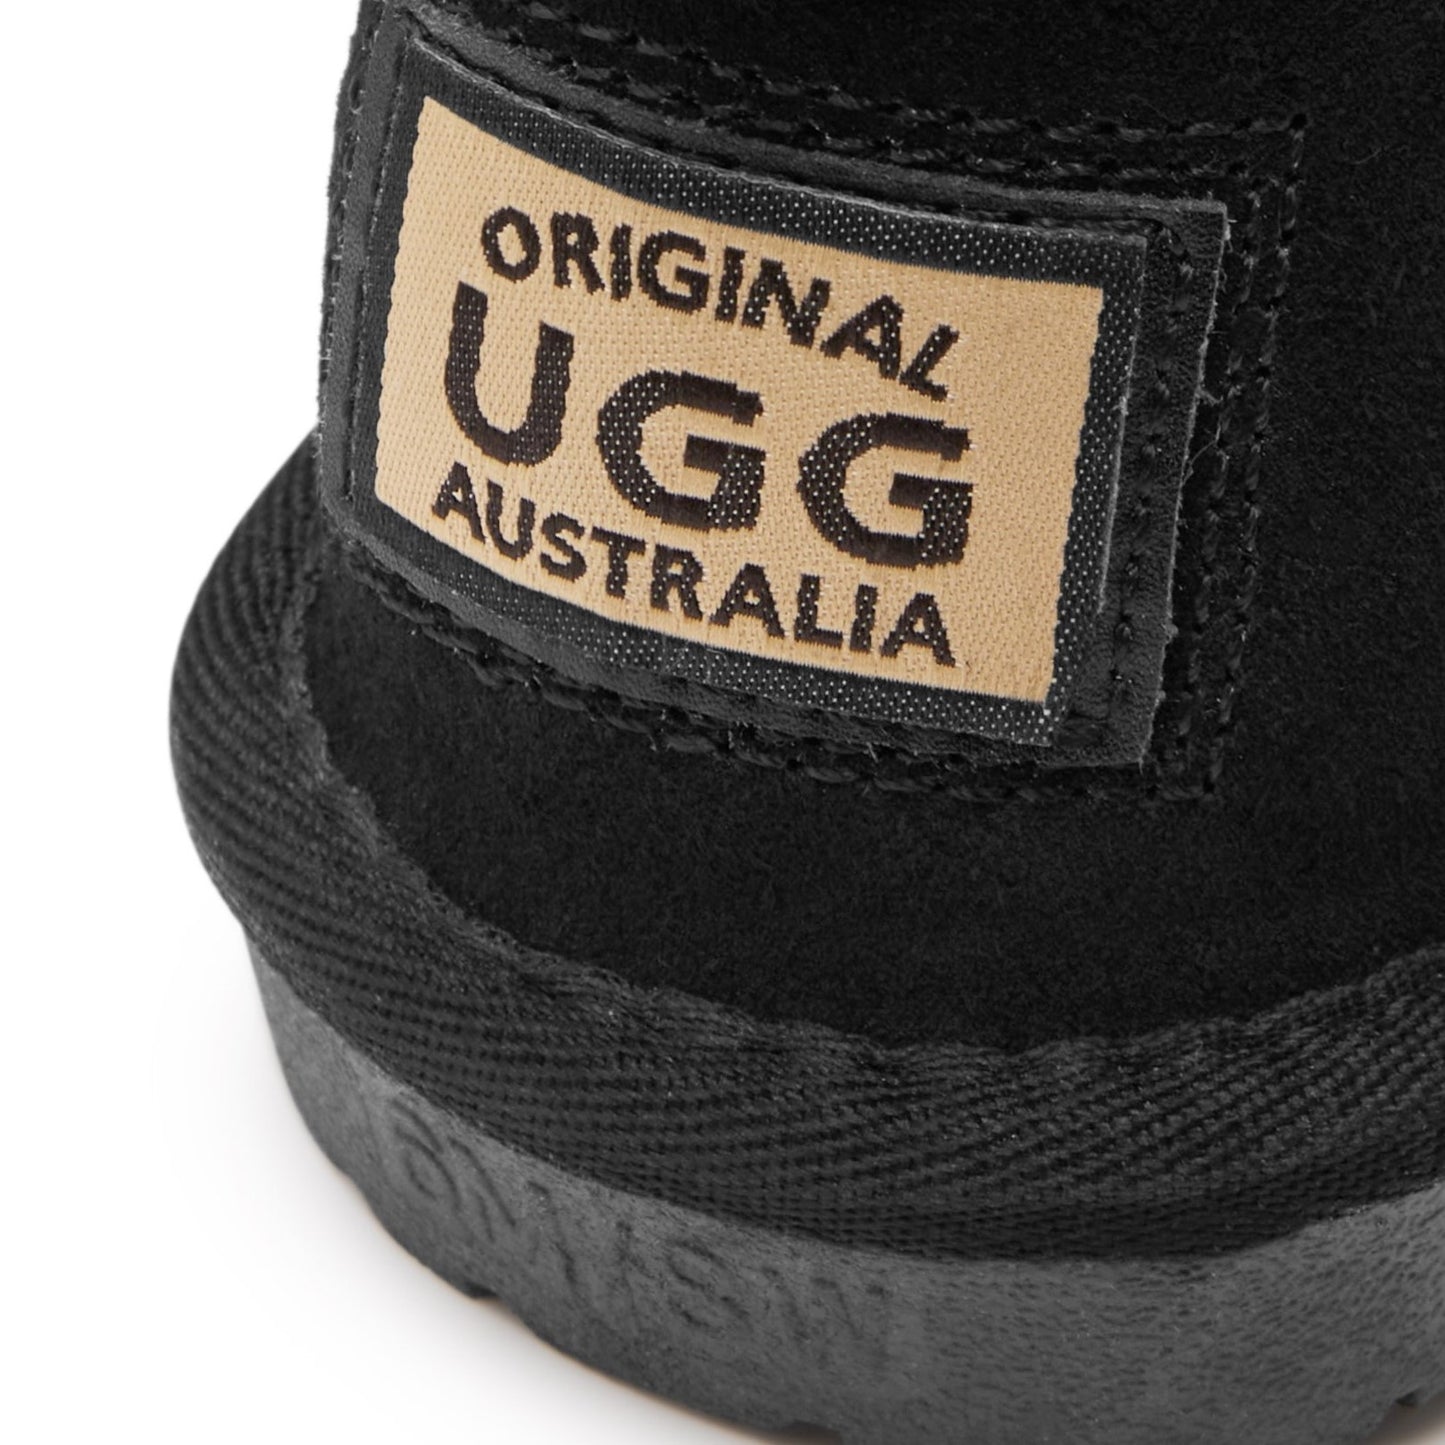 Originals Ugg Australia Zip Lace Mid Boot Black